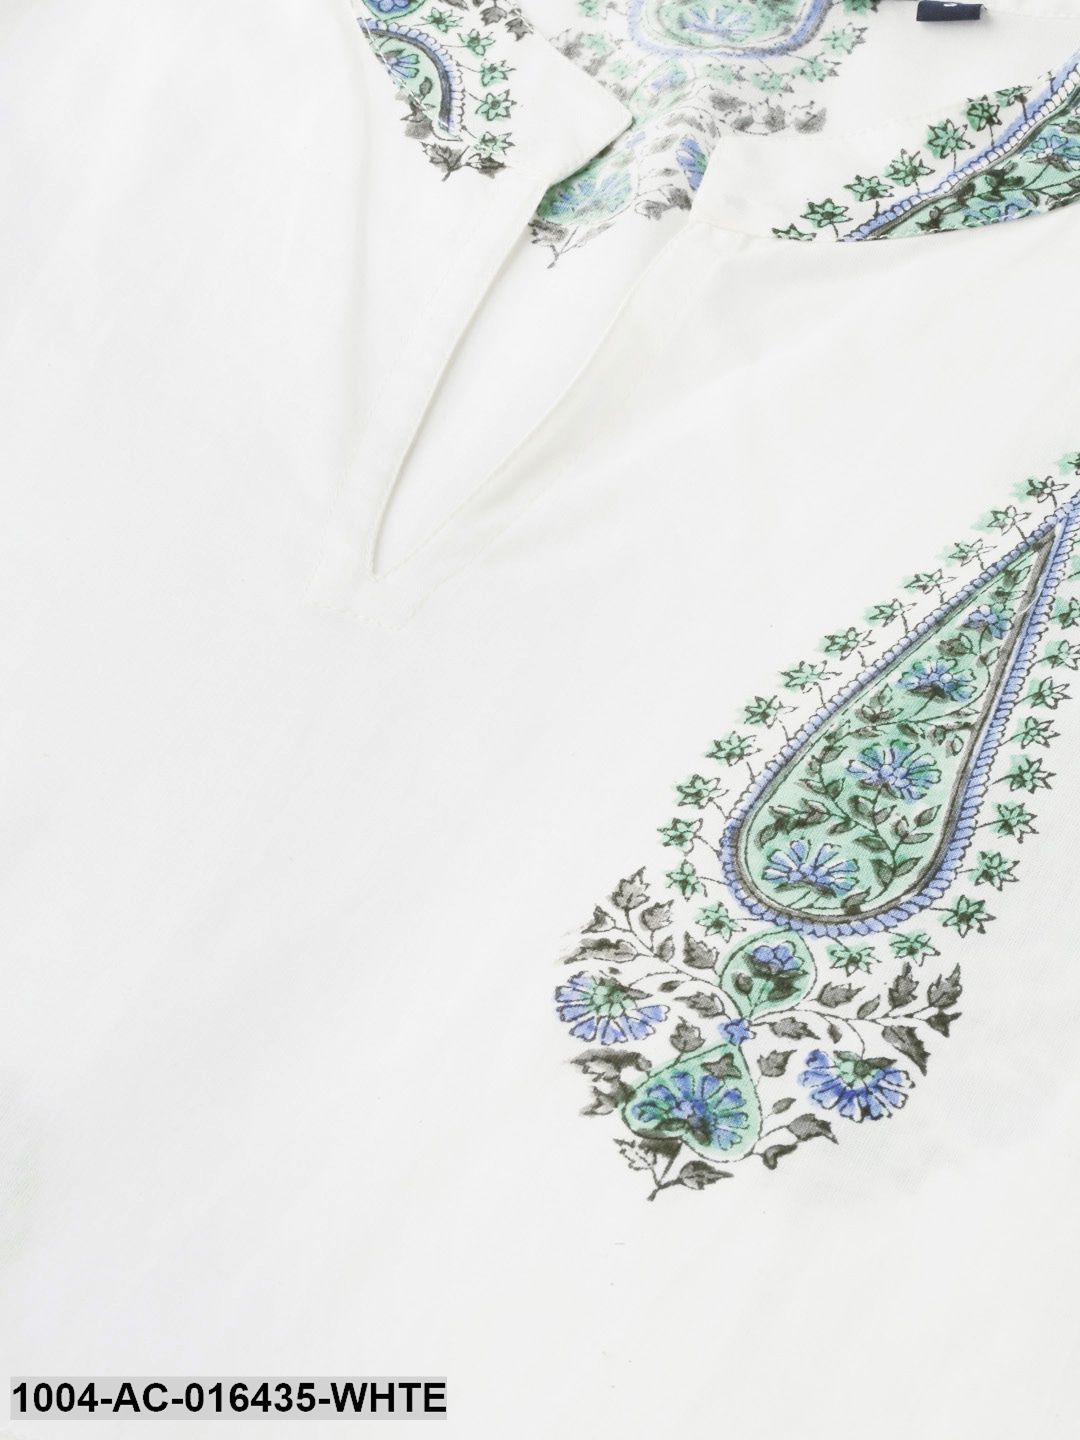 White Floral Printed Mandarin Collar Cotton Maxi Dress